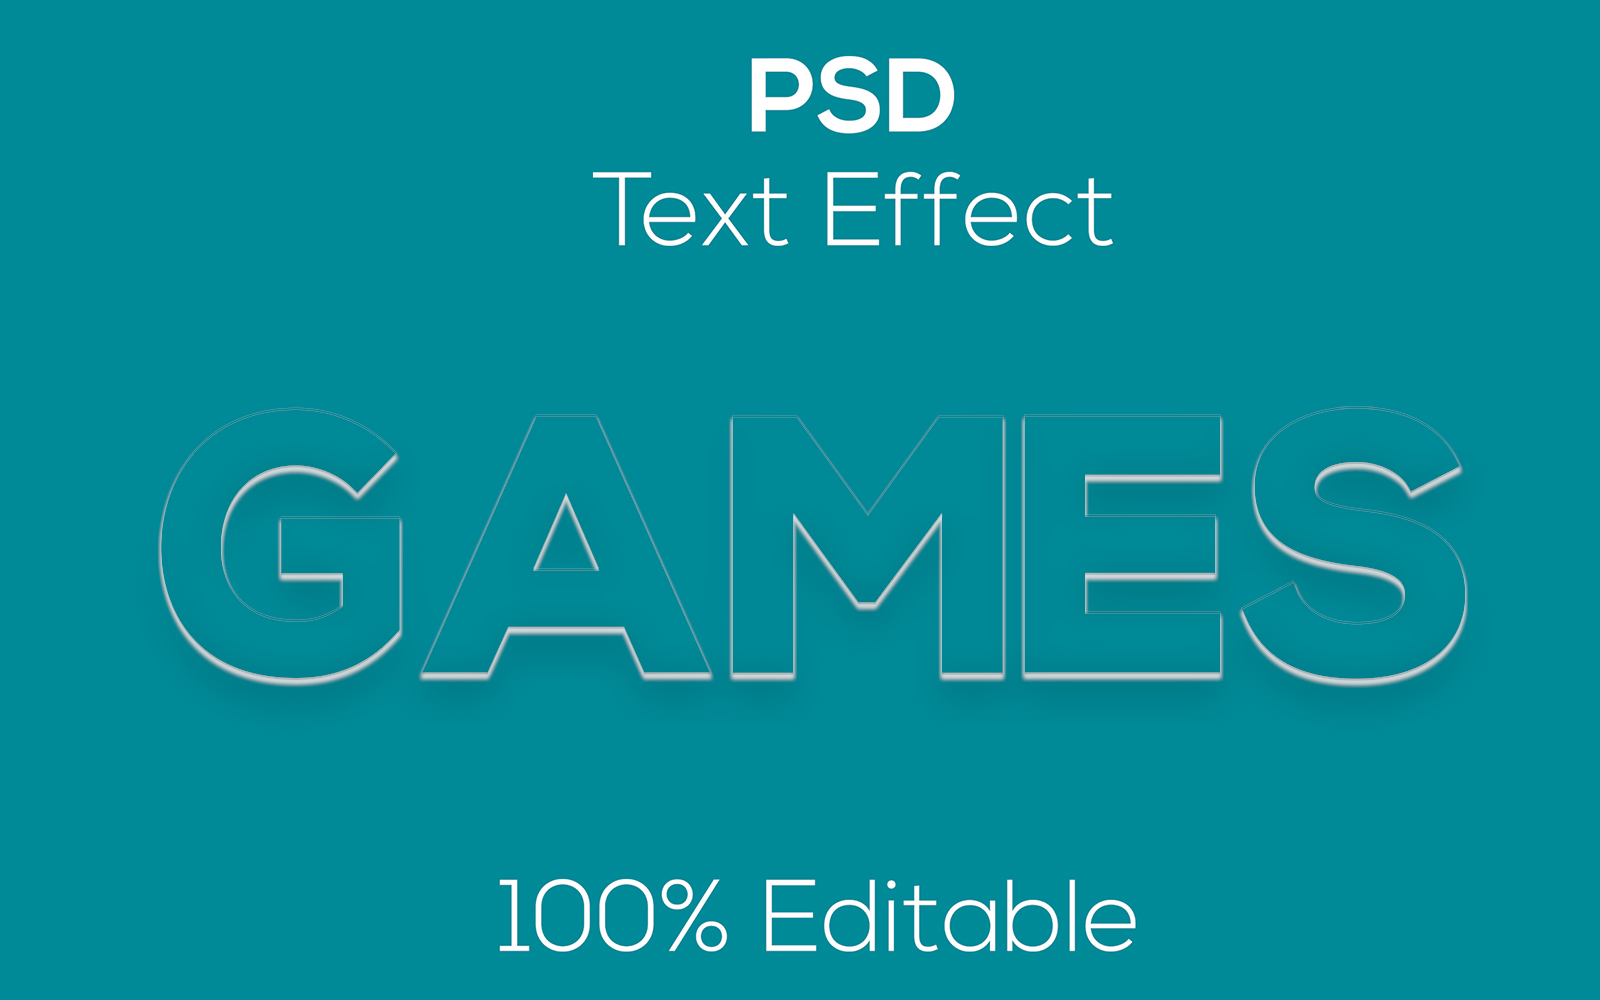 Games | Editable Premium Games Psd Text Effect